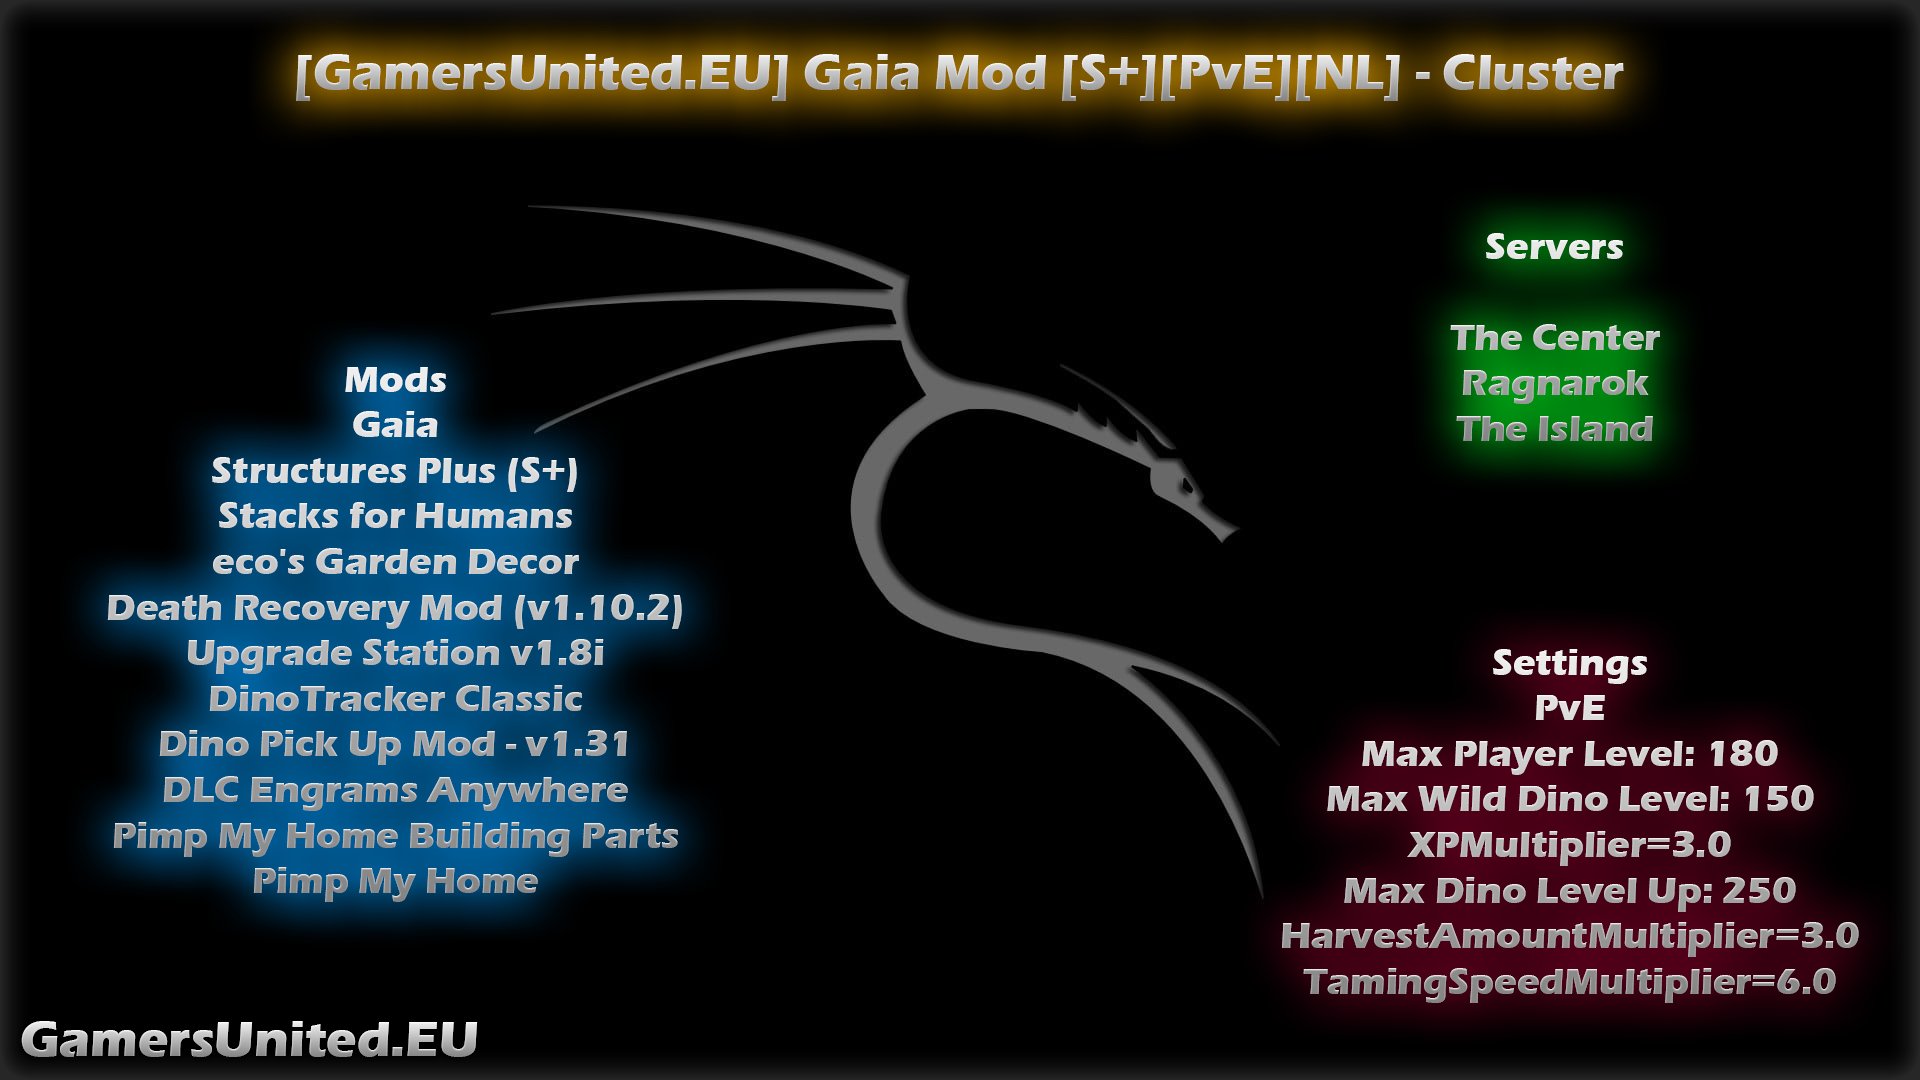 Pve Cluster Gamersunited Eu Gaia Mod S Pve Nl Eu Server Advertisements Ark Official Community Forums